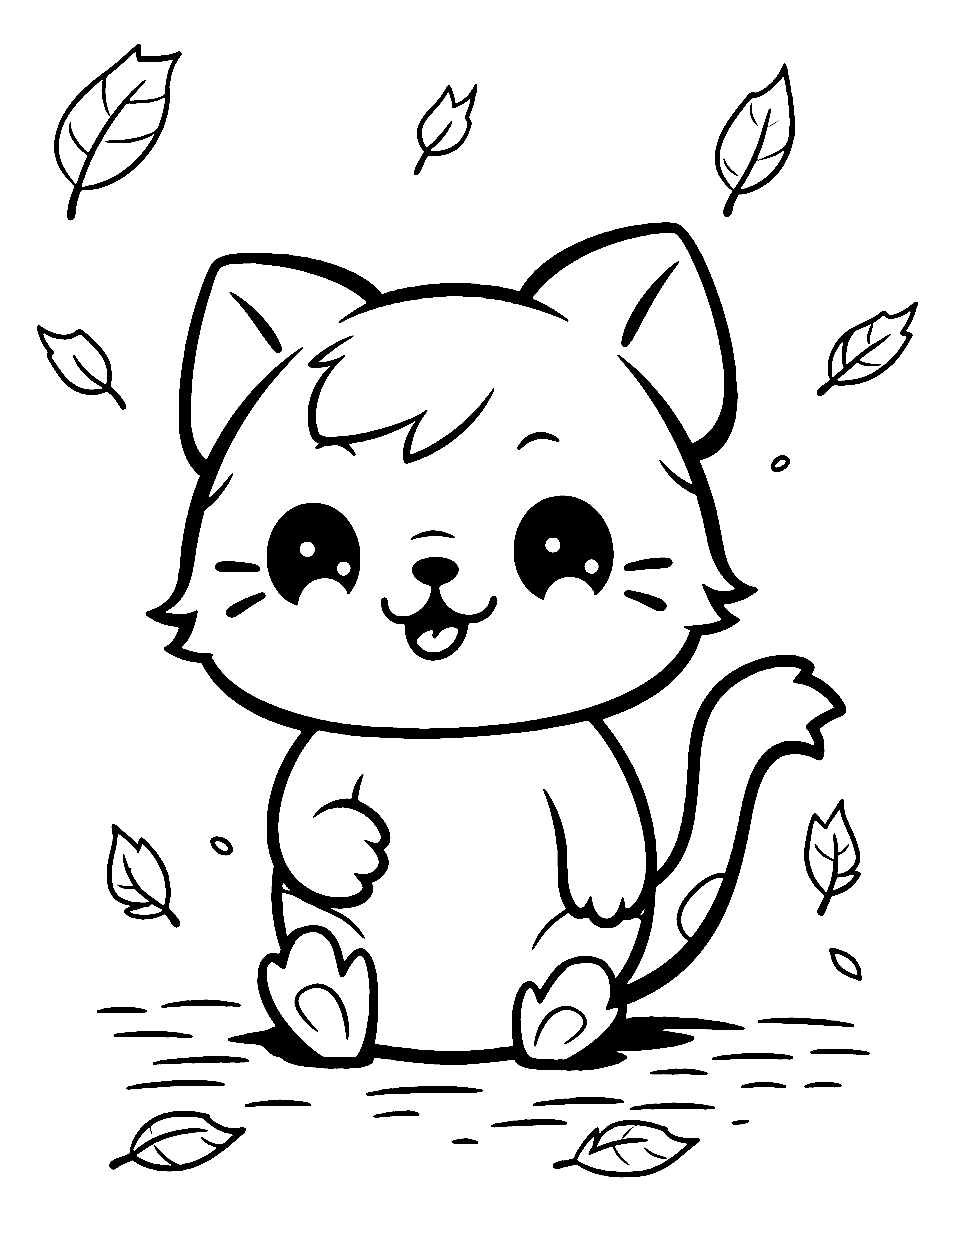 Chibi Kitty Fun Kitten Coloring Page - A chibi-style kitten, joyfully batting at falling leaves.